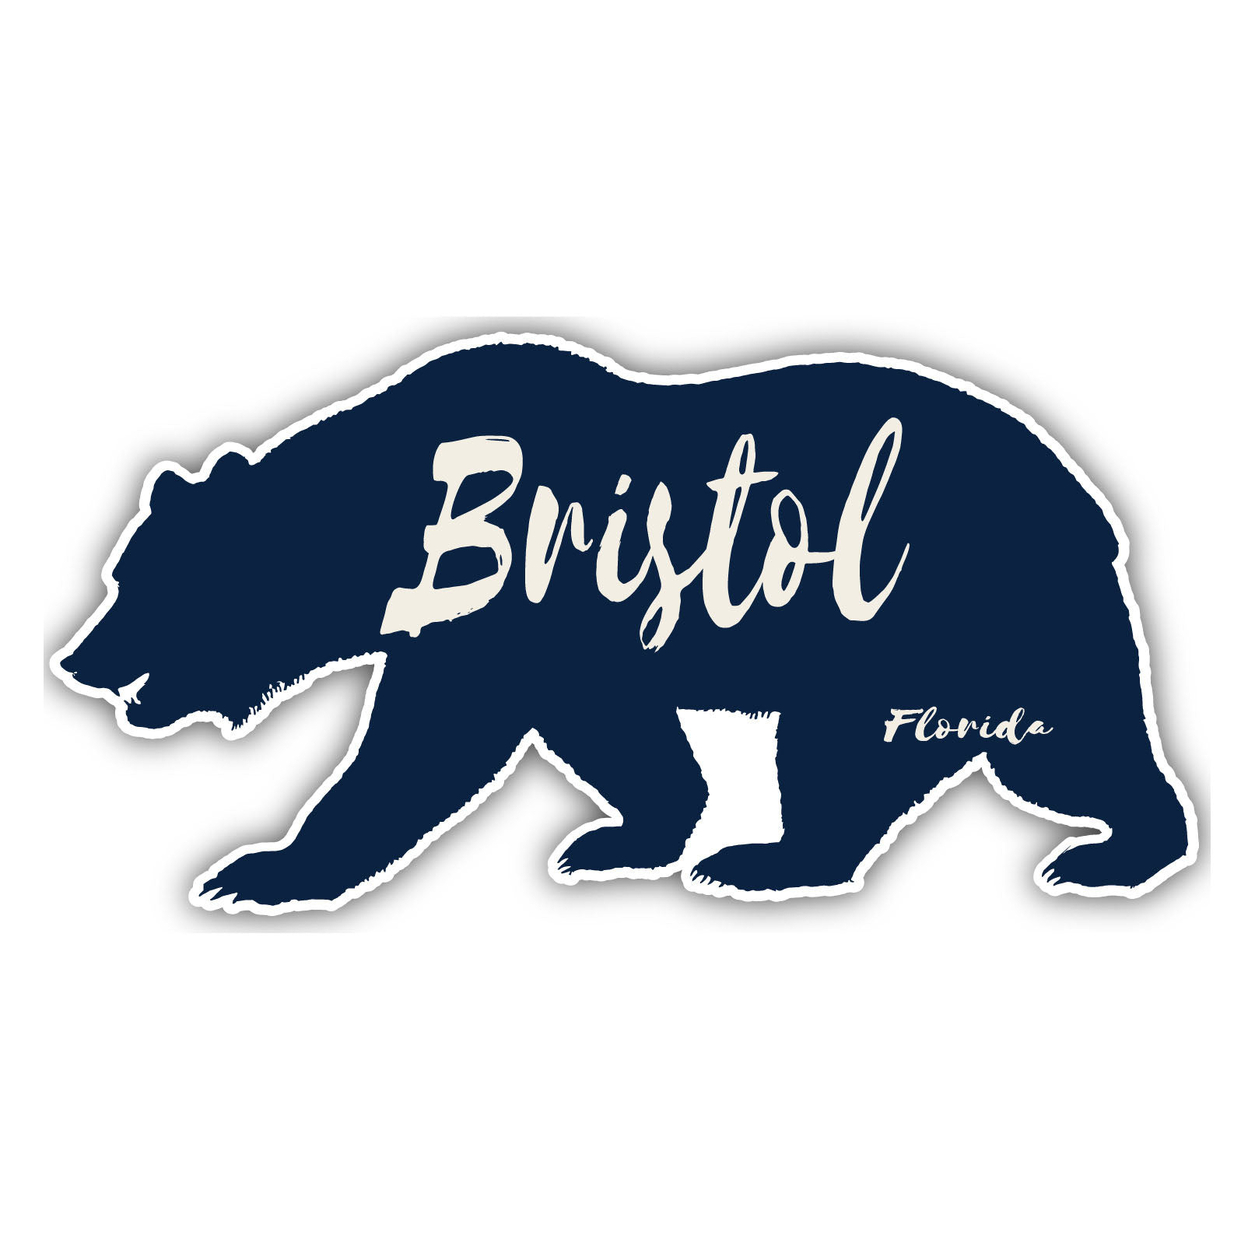 Bristol Florida Souvenir Decorative Stickers (Choose Theme And Size) - Single Unit, 4-Inch, Bear